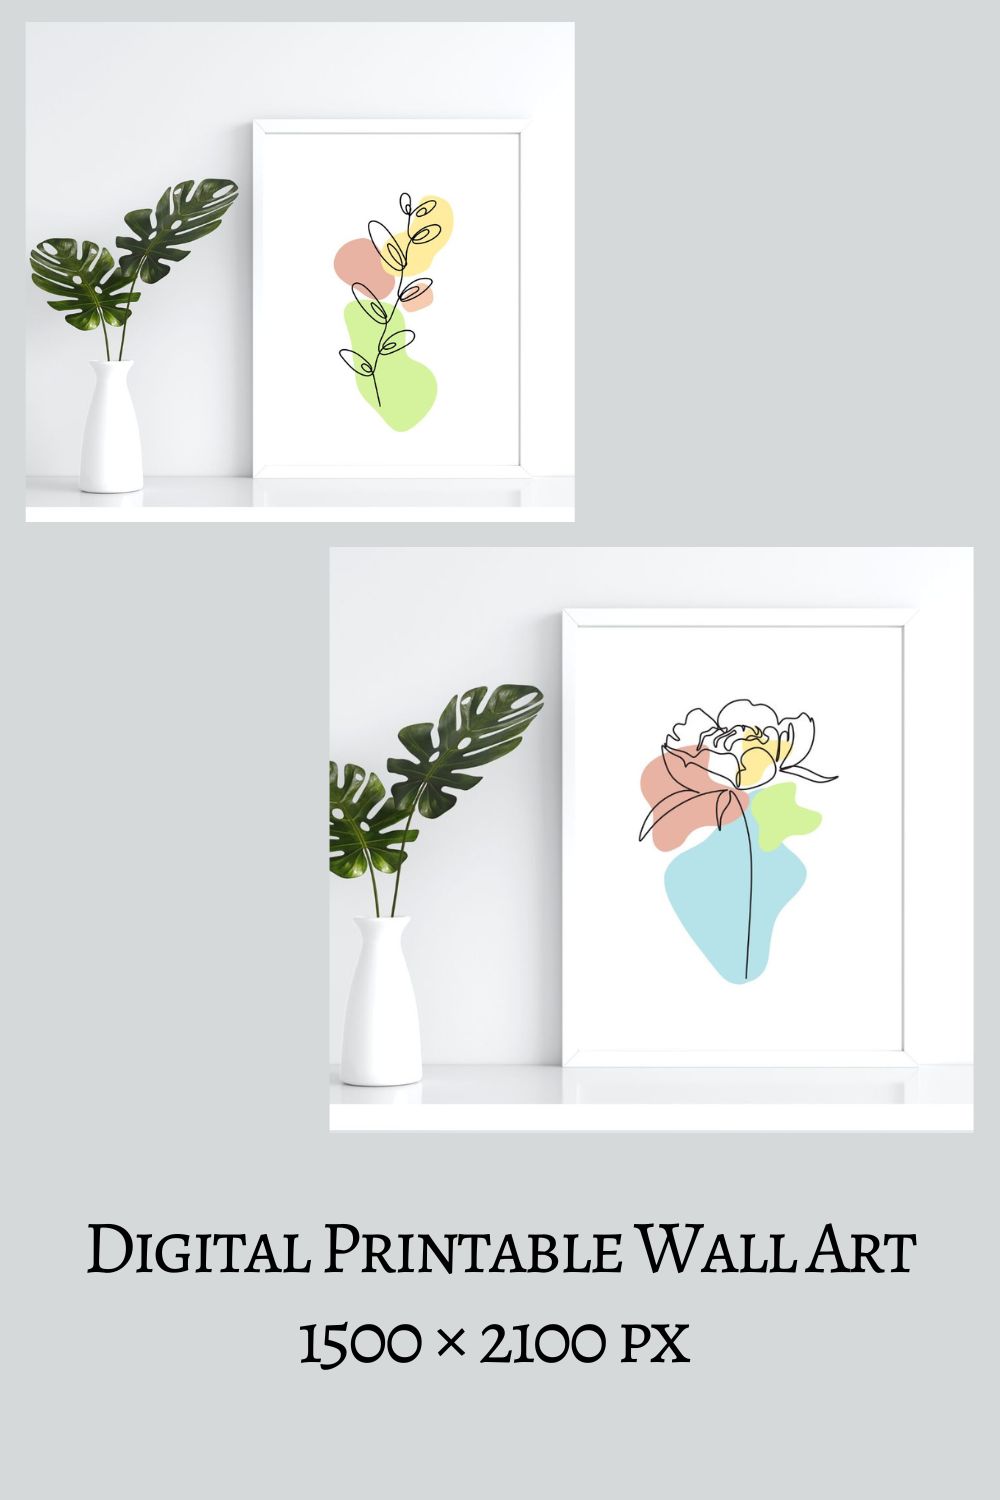 Digital Printable Wall Art - pinterest image preview.